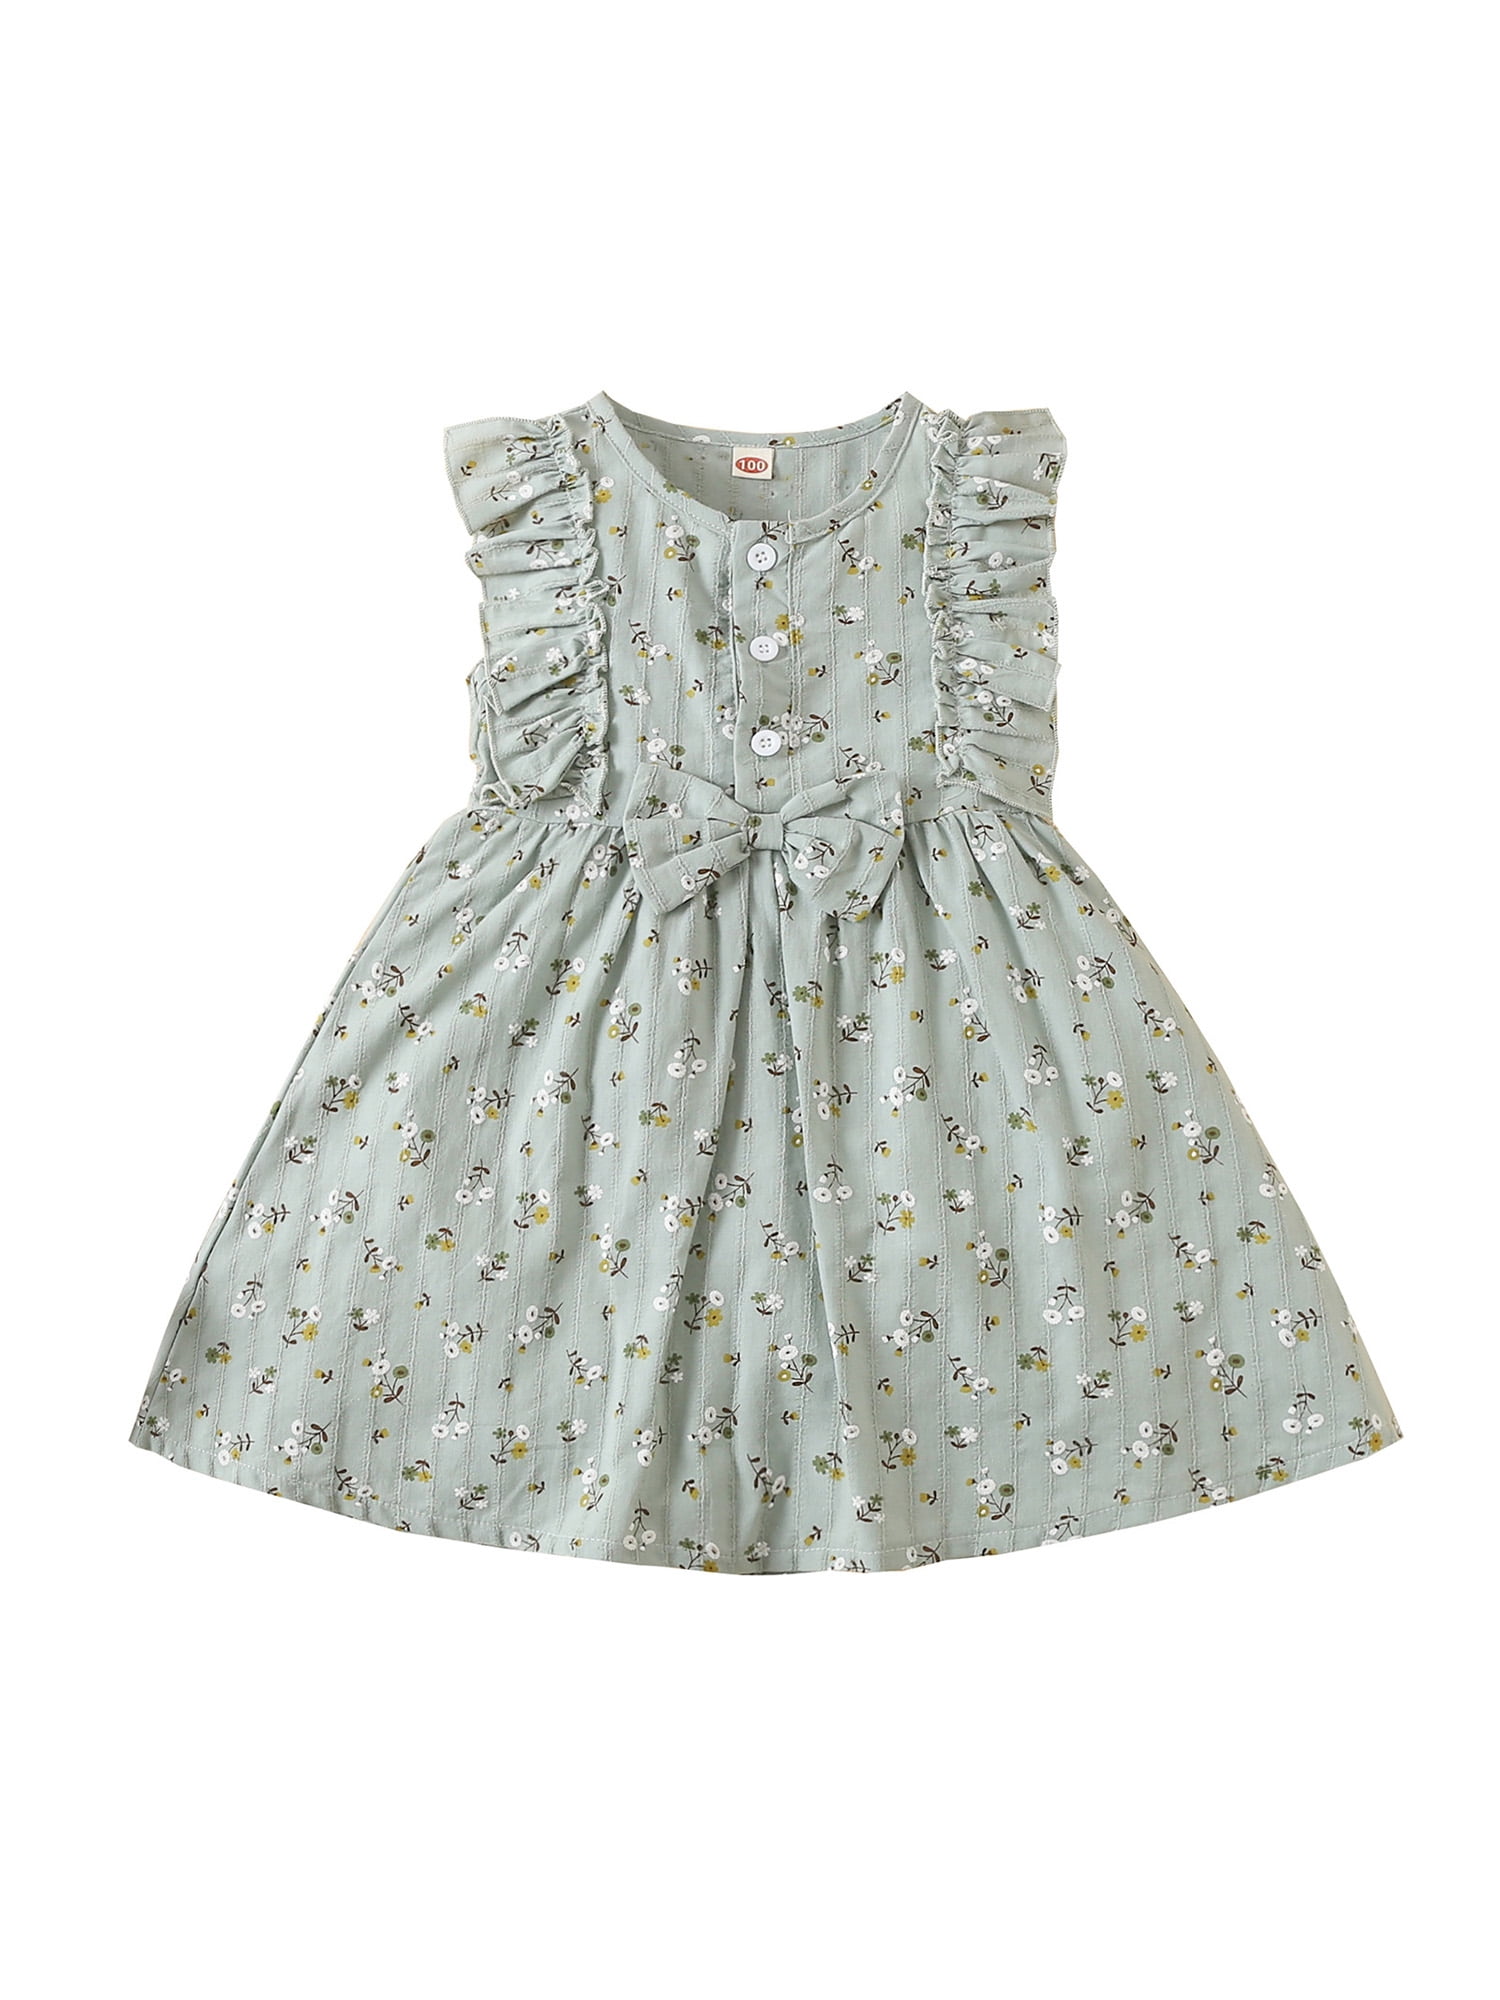 Toddler Baby Girl Dress Floral Ruffle Sleeveless Dresses Summer Fall Cute Infant Girls Sundress Clothes 